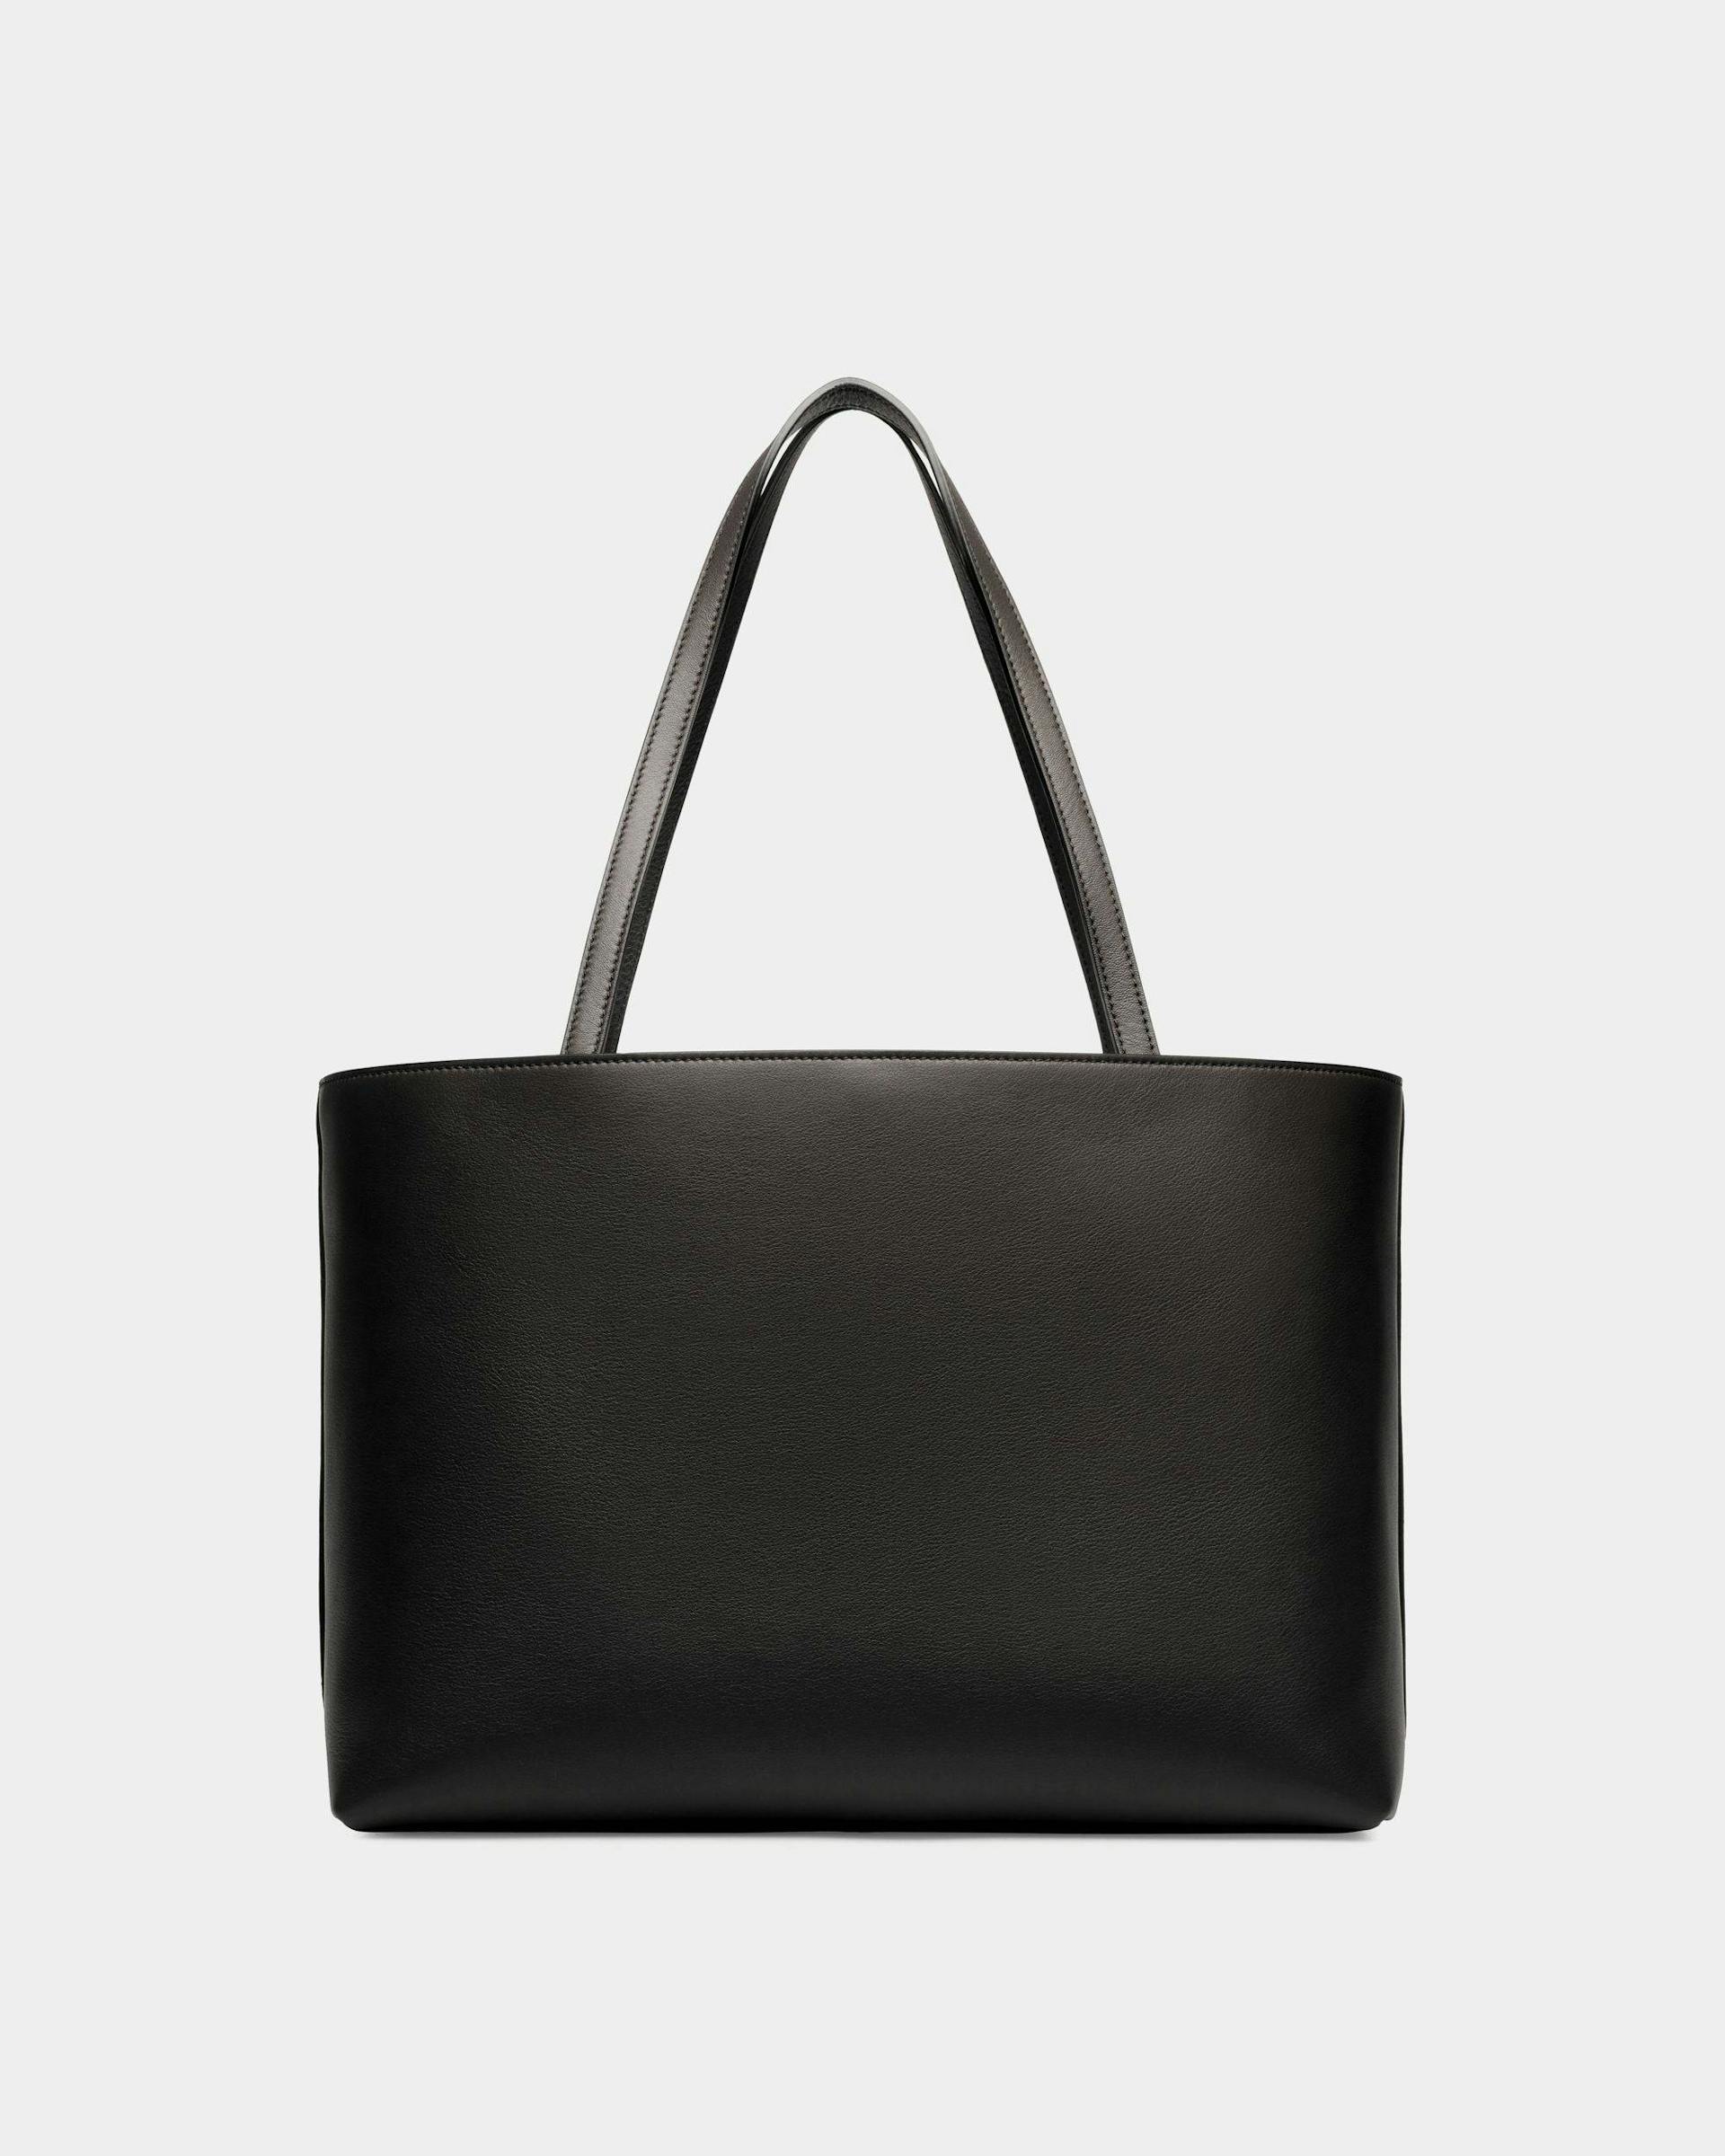 Women's Bally Spell Tote Bag in Black Leather | Bally | Still Life Back